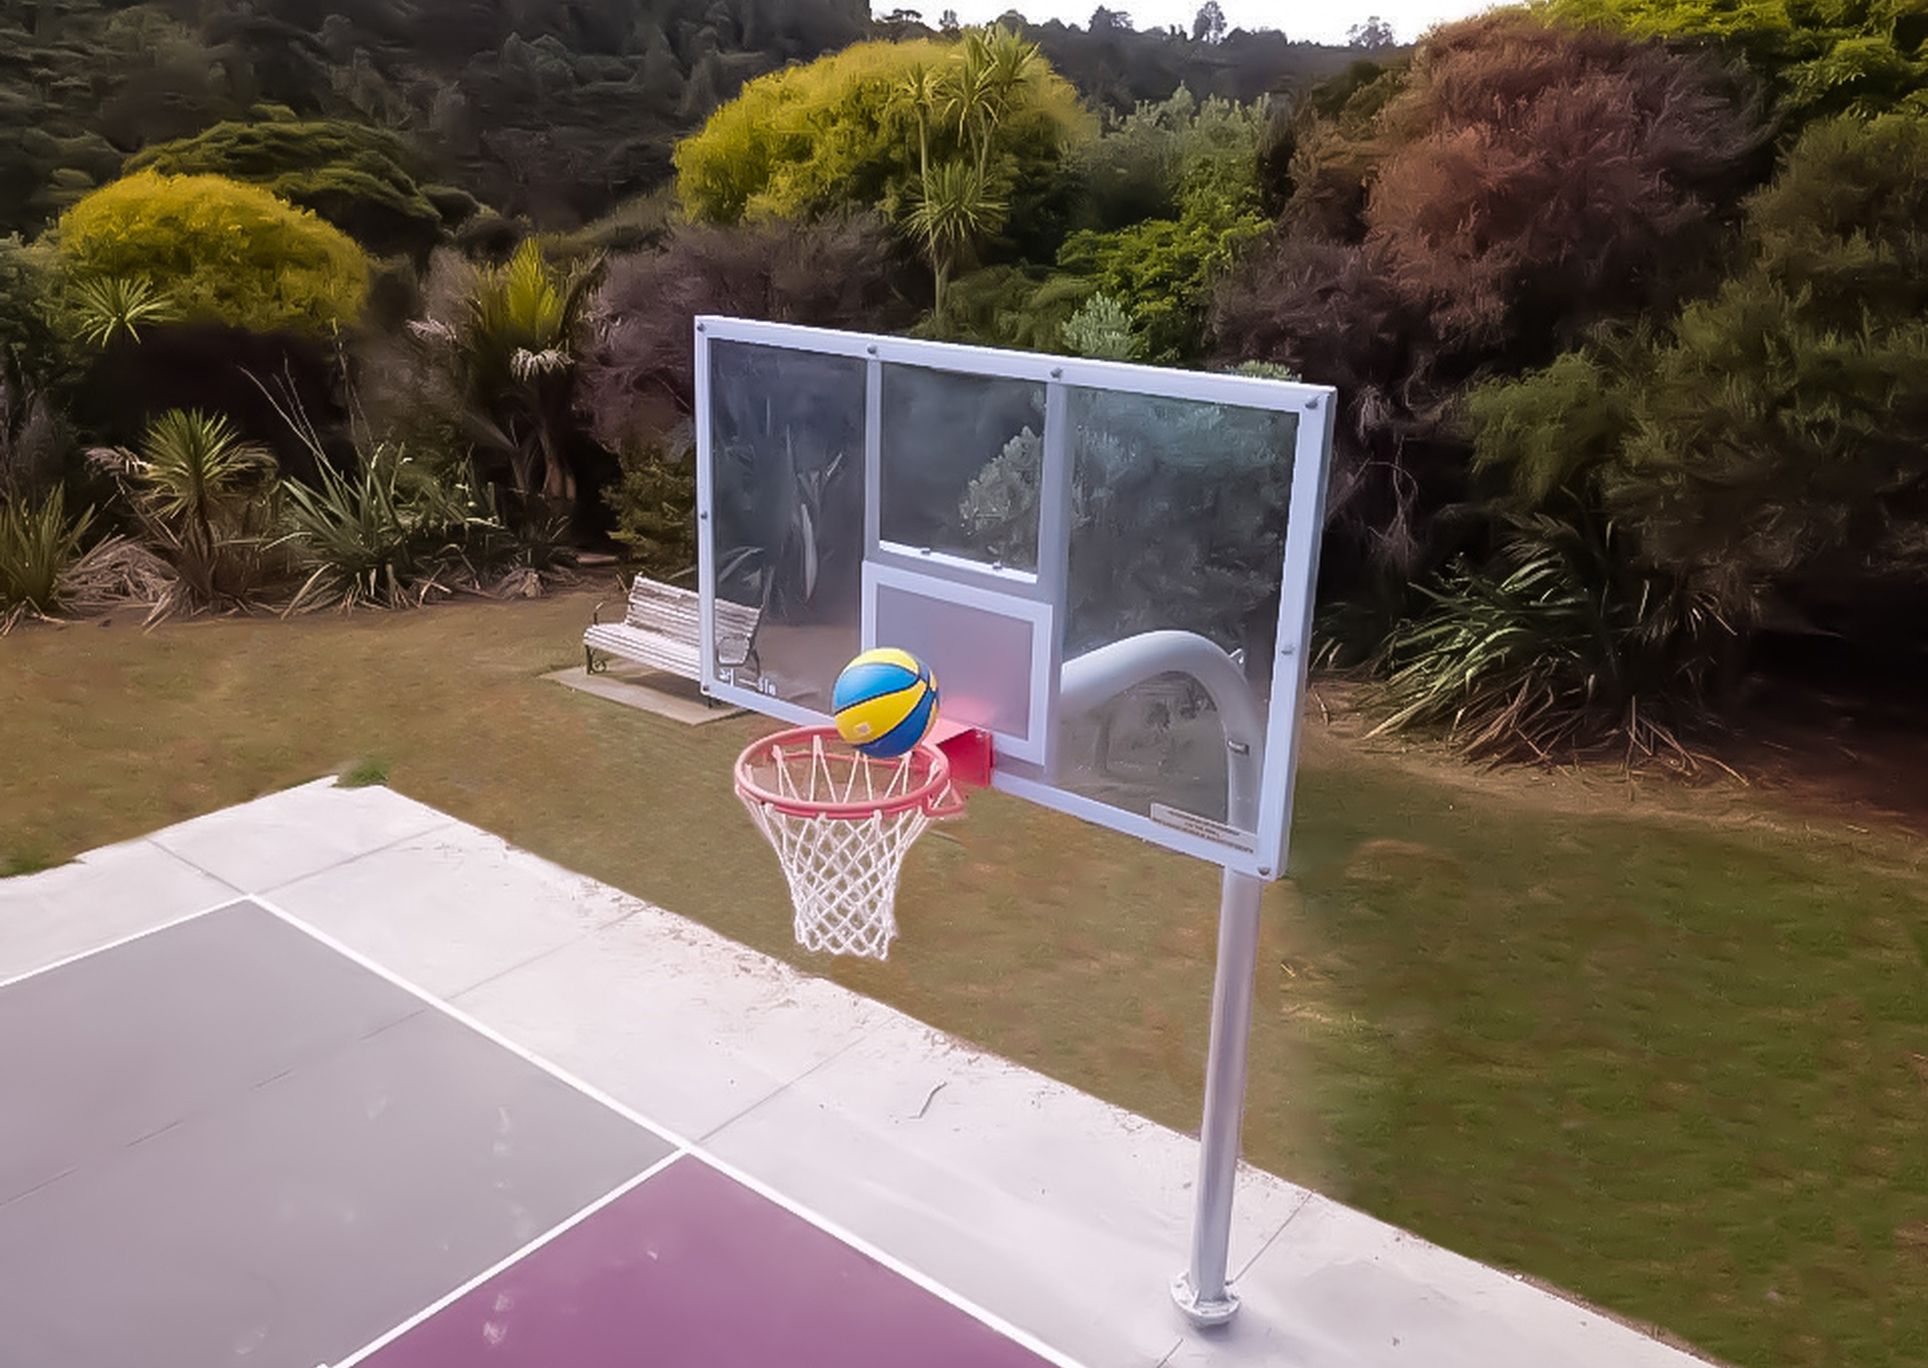 Mighty Basketball Hoop, Manuka Reserve